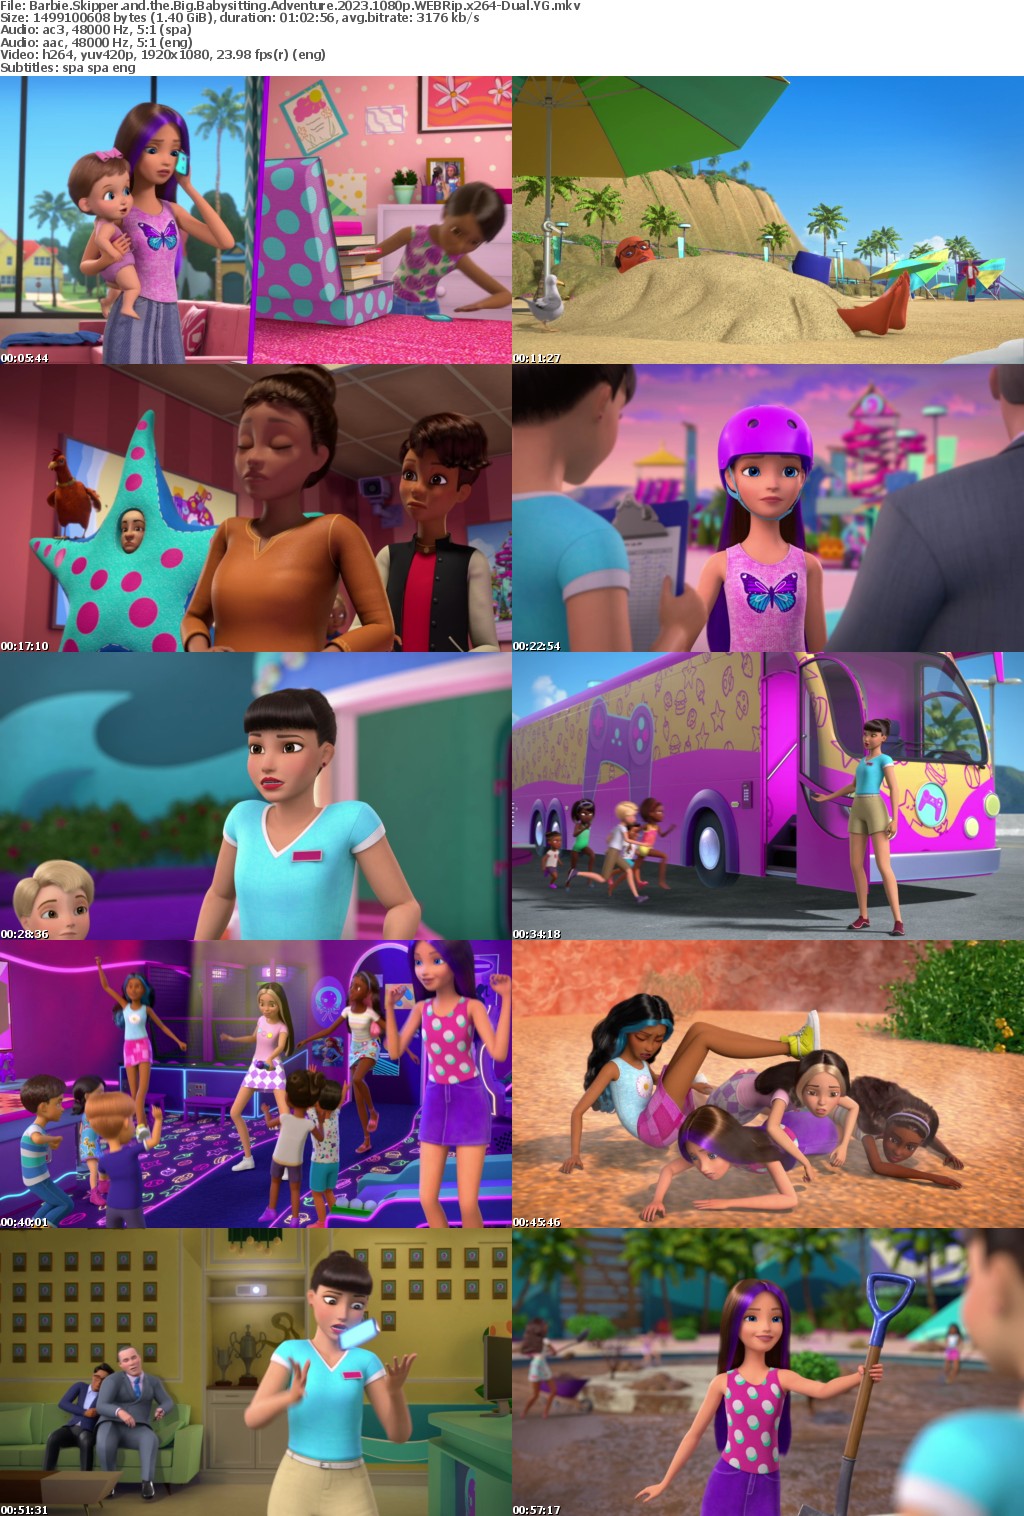 Barbie Skipper and the Big Babysitting Adventure 2023 1080p WEBRip x264-Dual YG